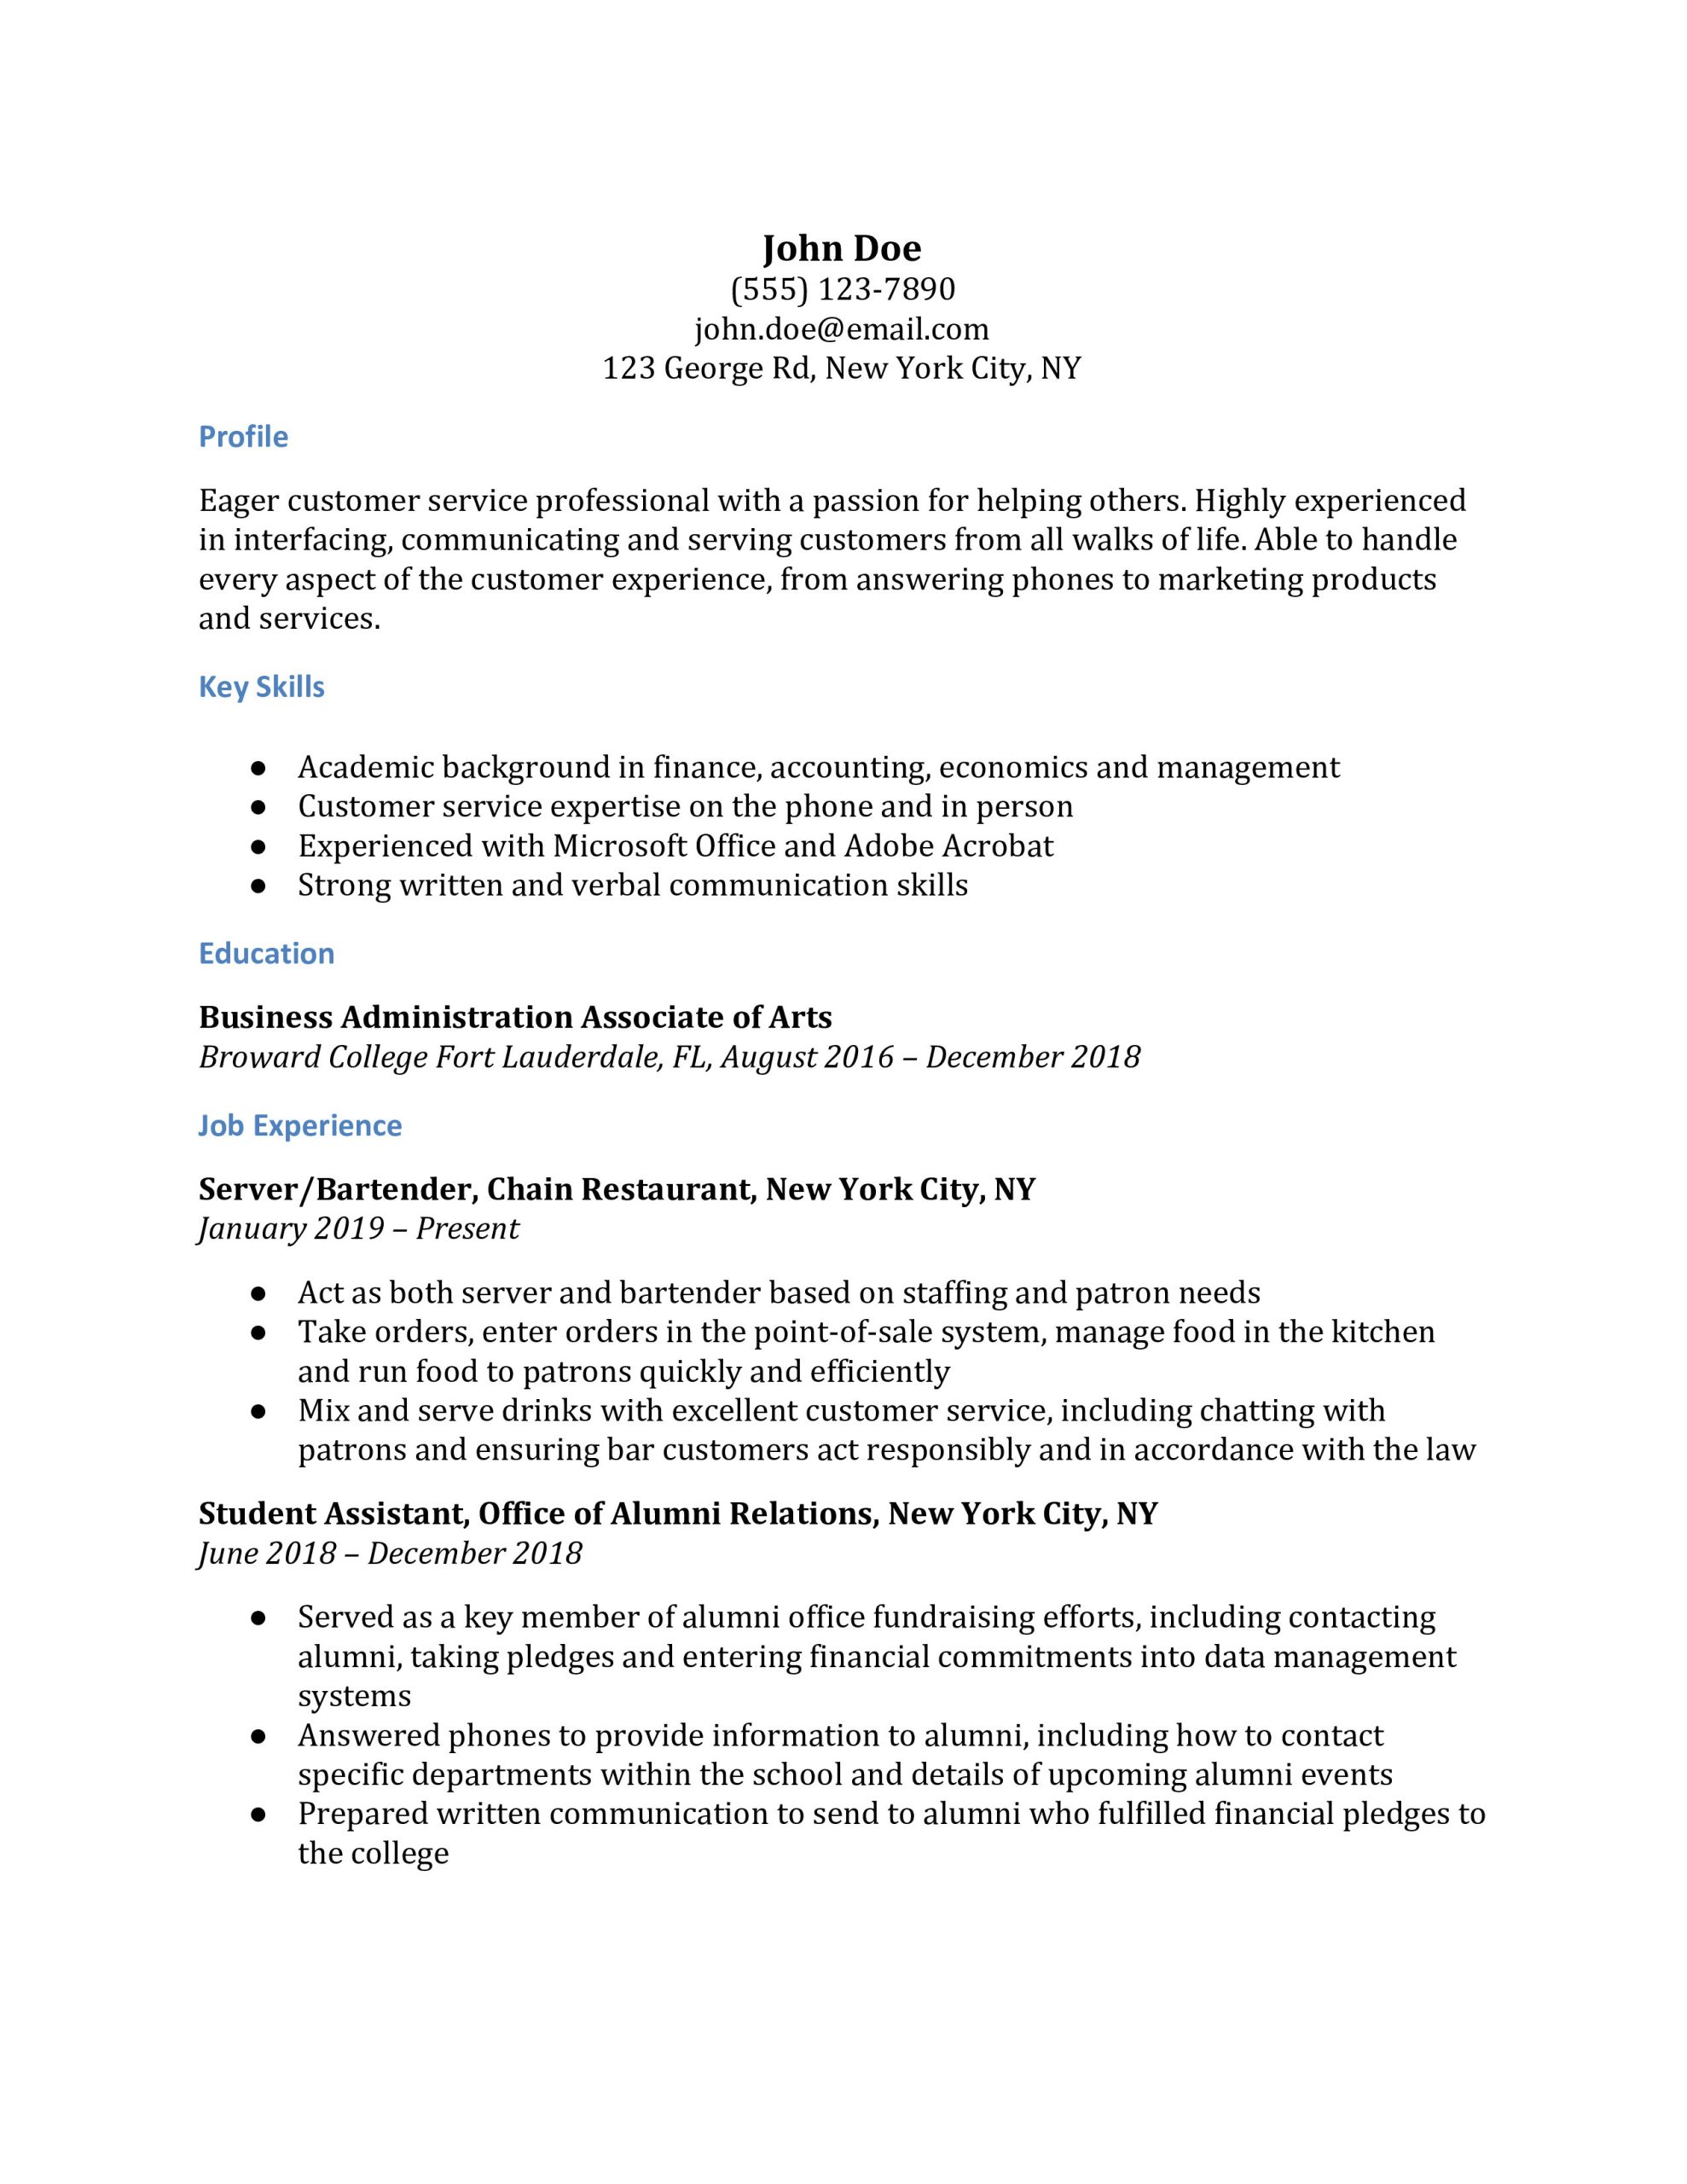 Resume Sample for Entry Level Administrative assistant Administrative assistant Resume Examples Resumebuilder.com